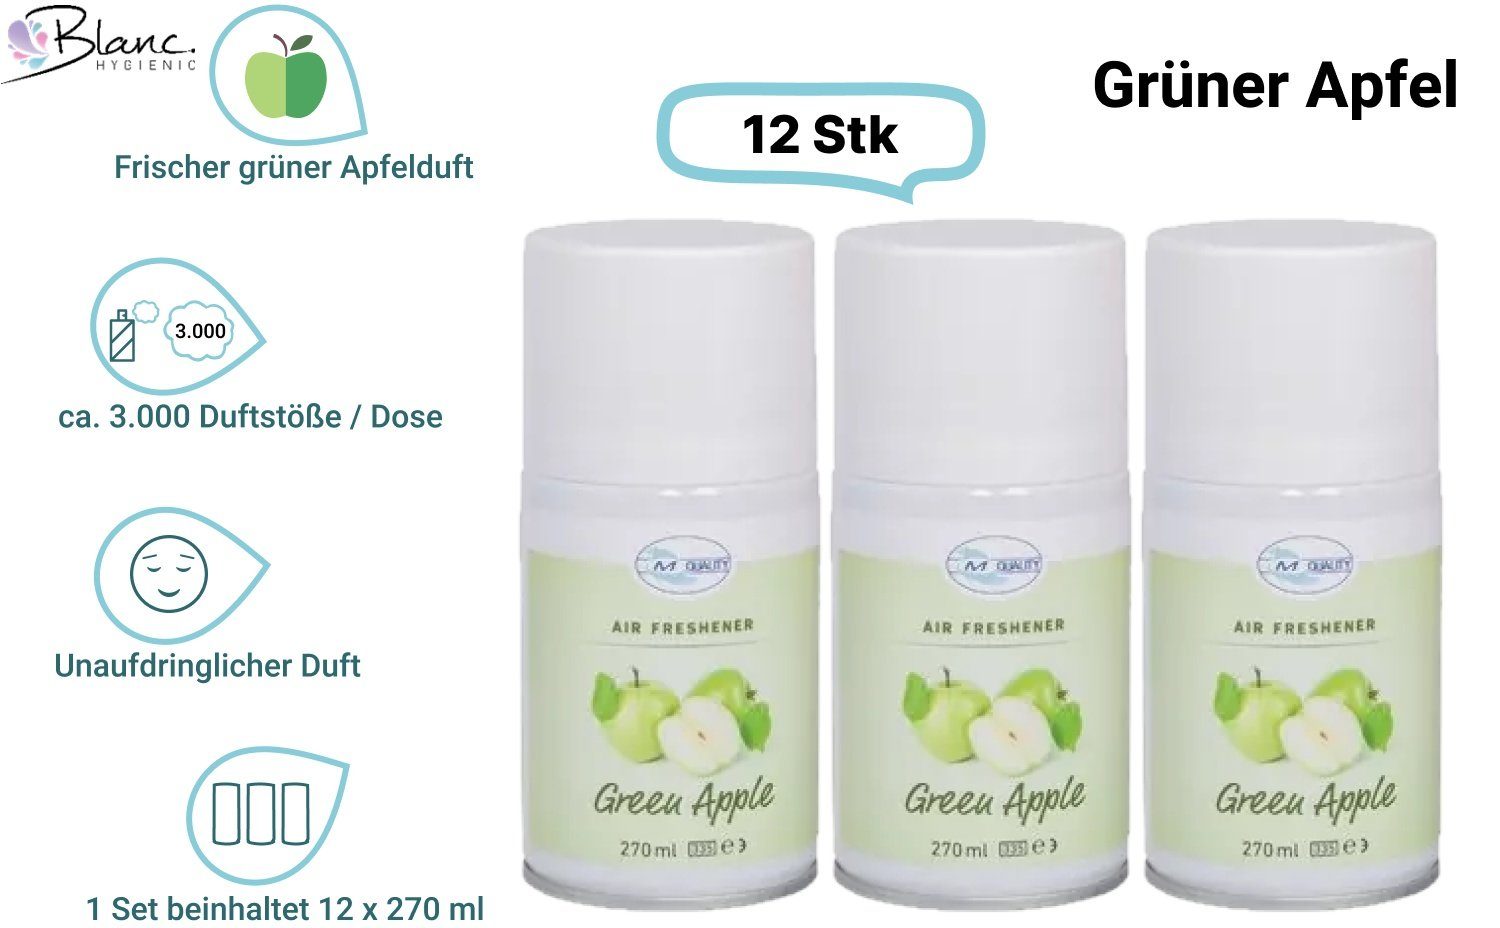 Grüner Apfel Hygienemittel Hygienic Blanc